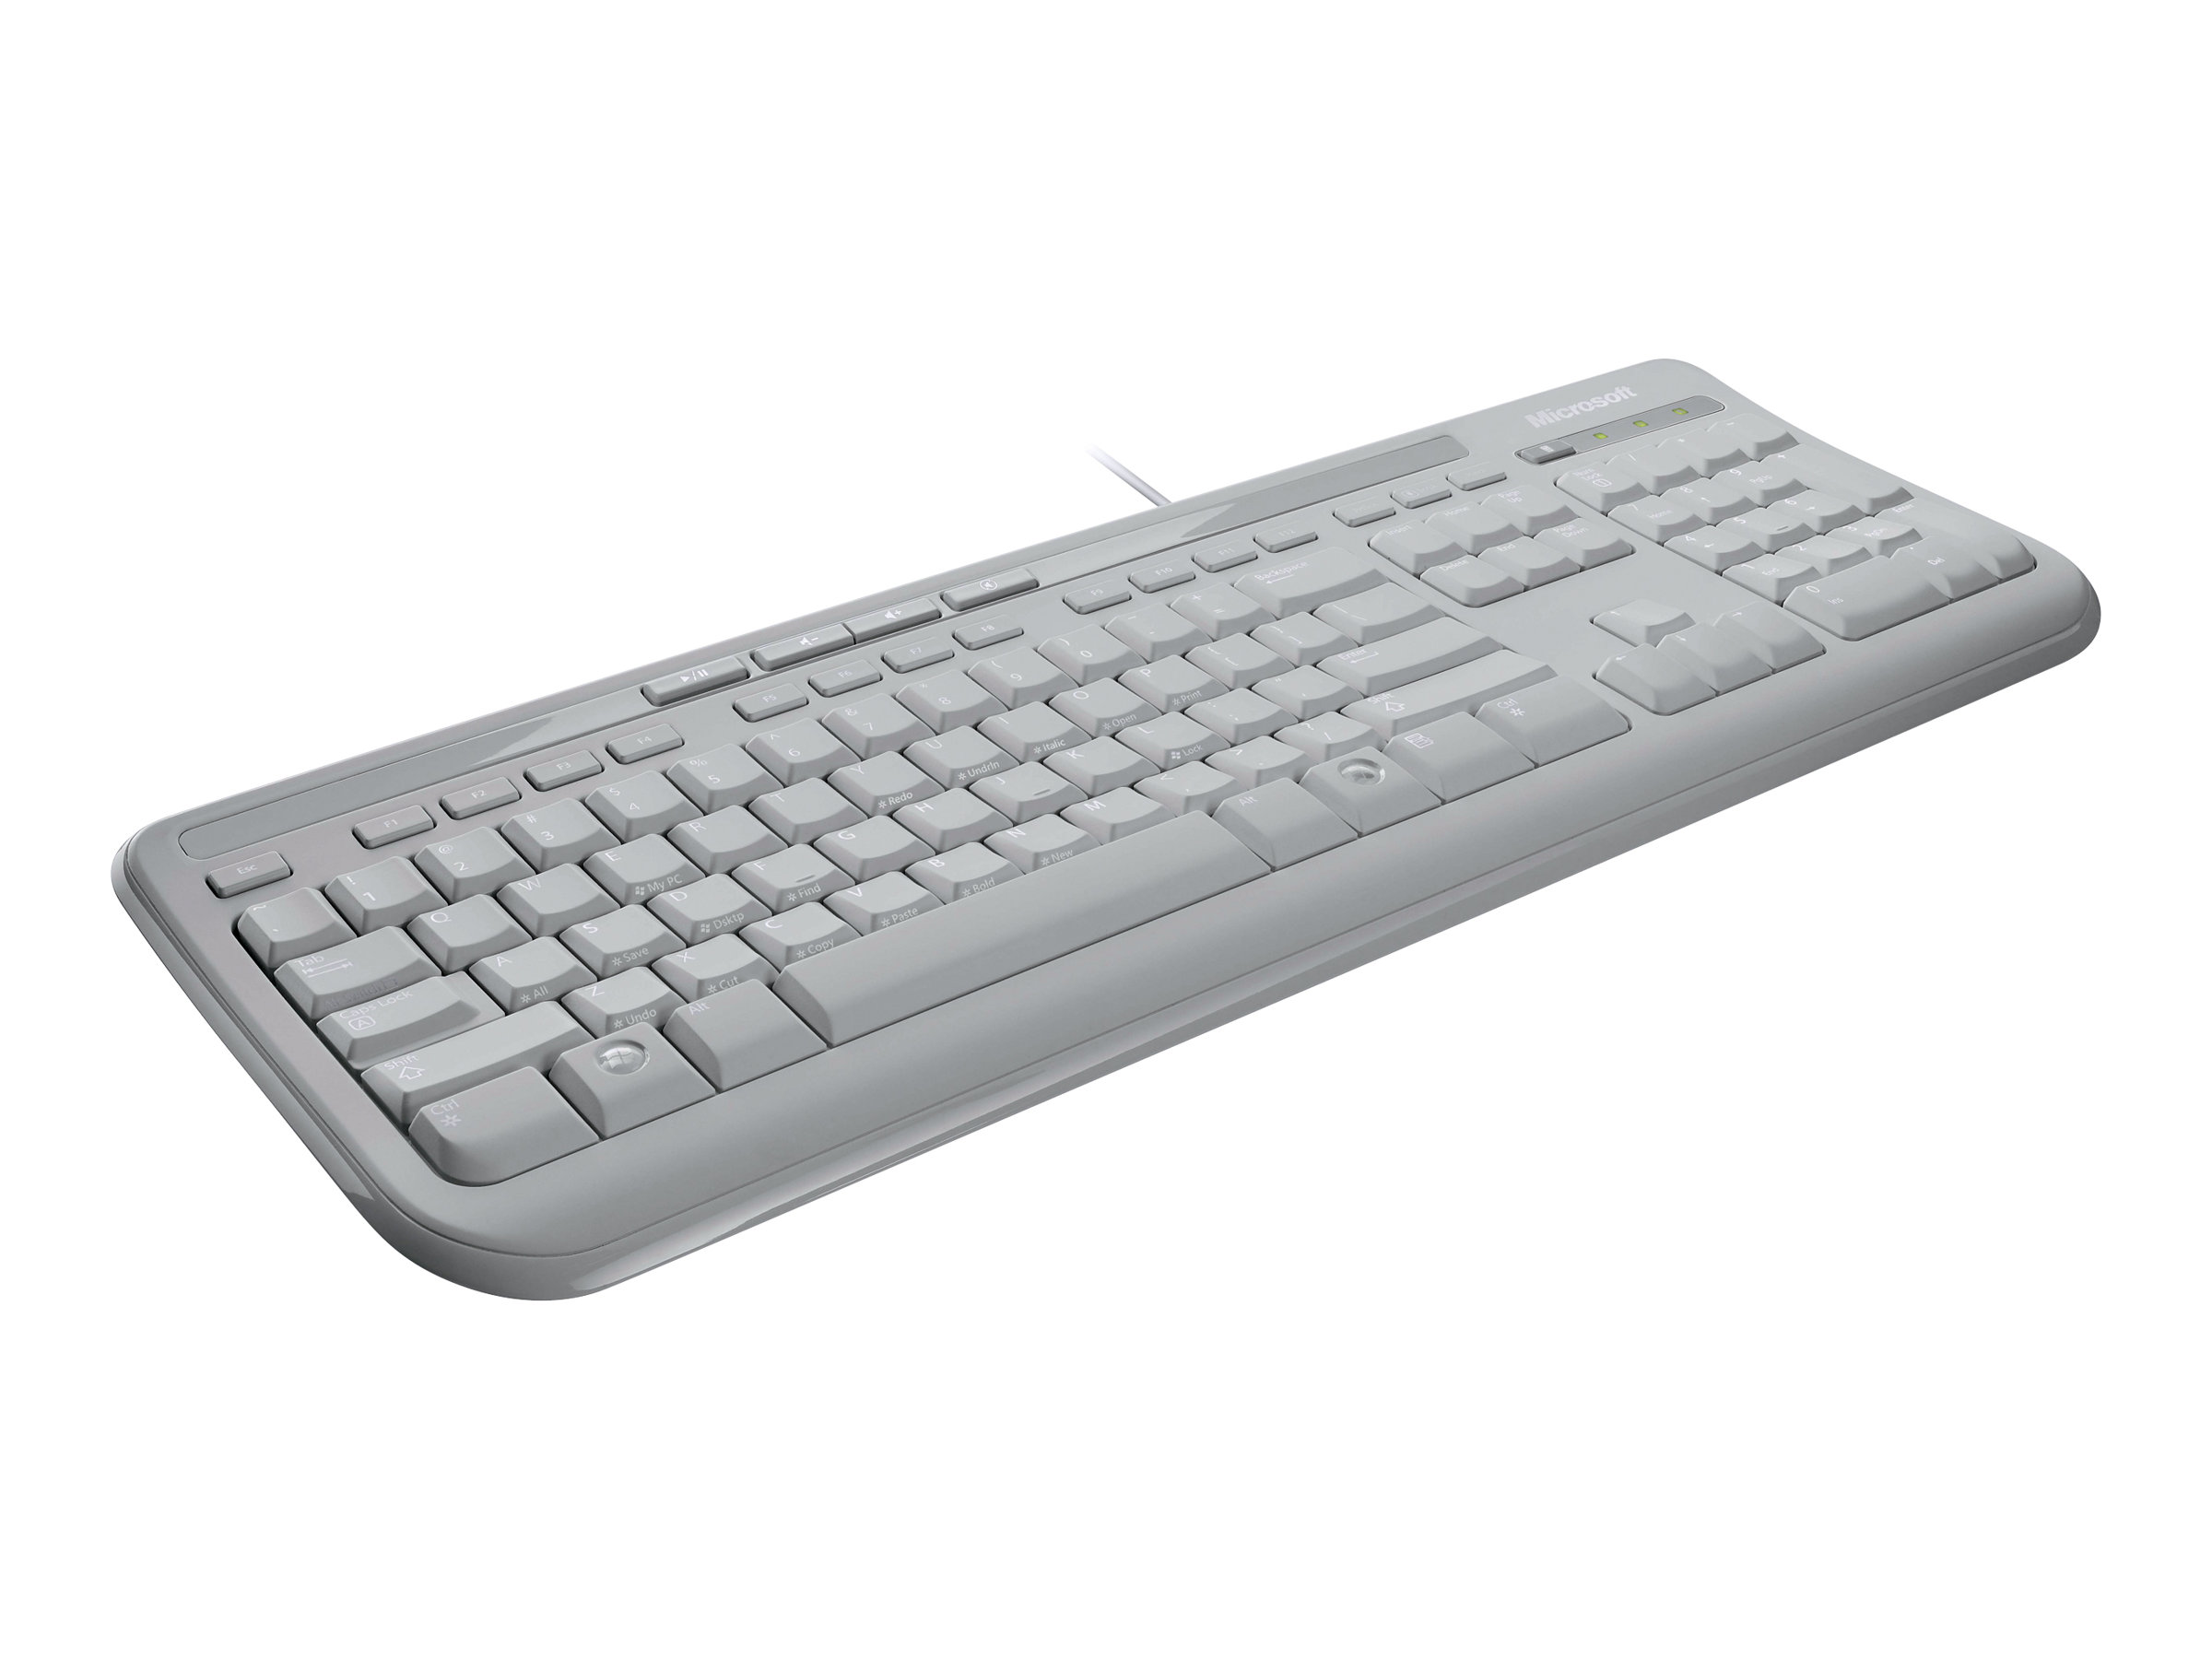 Microsoft Wired Keyboard 600 - Tastatur - USB